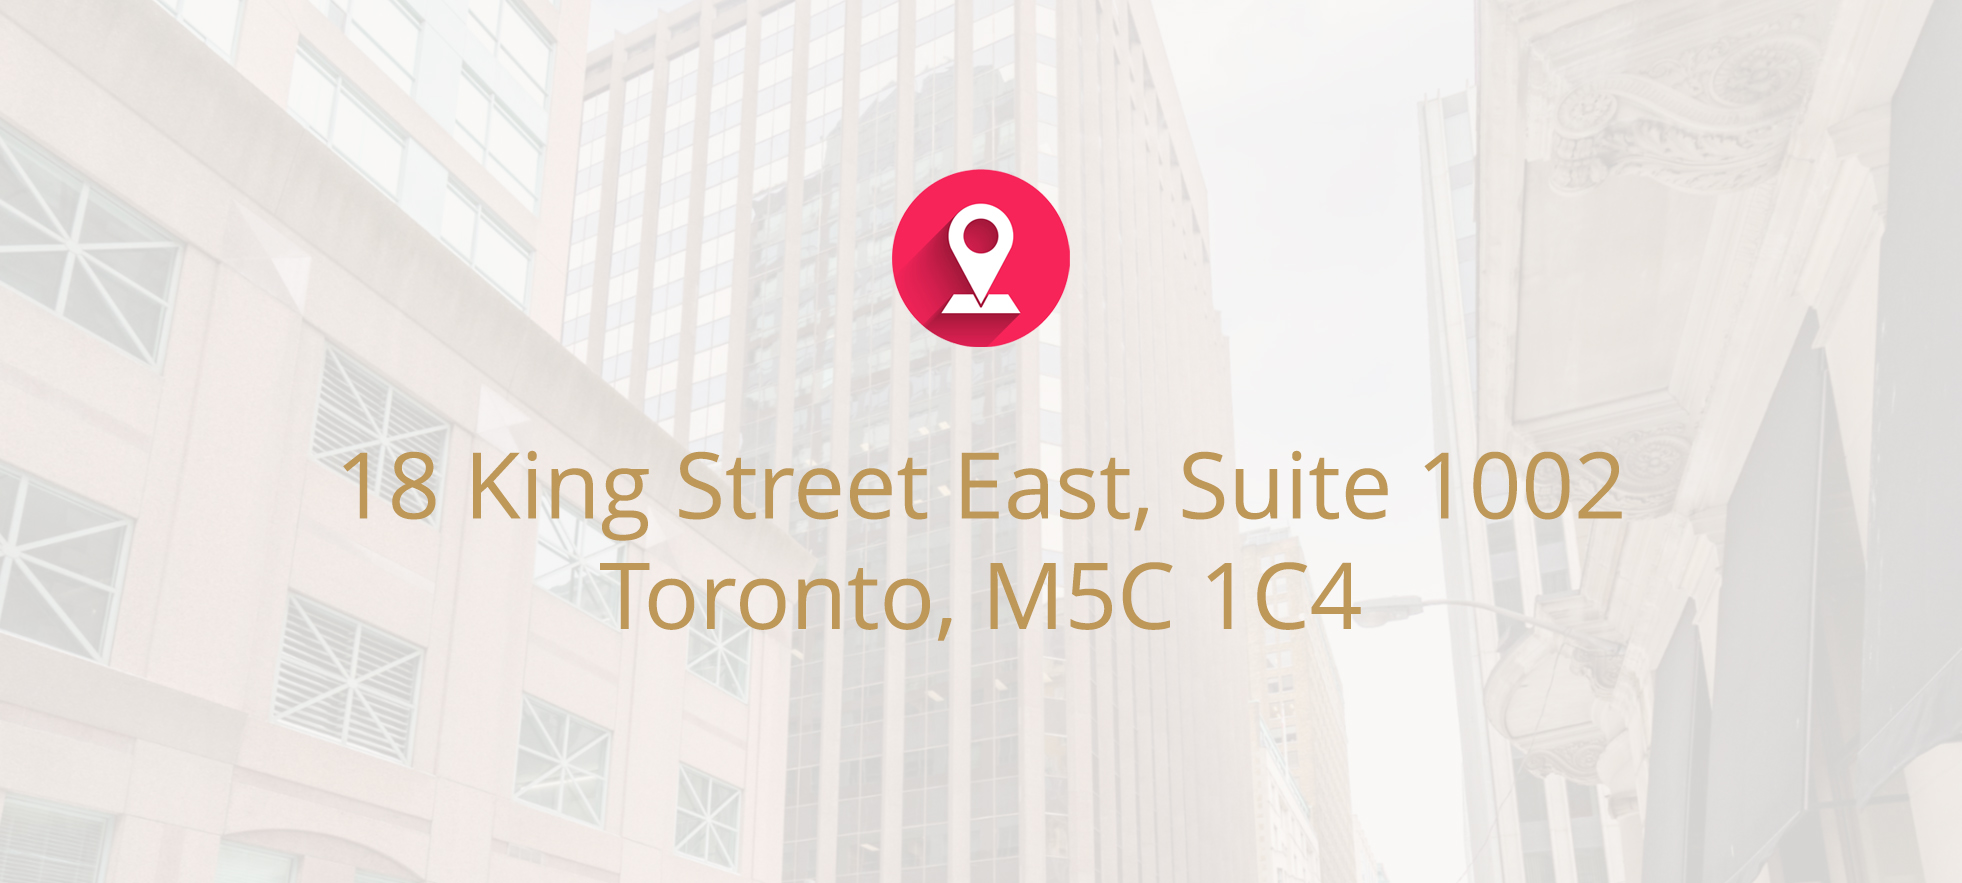 18 King Street East, Suite 1002, Toronto